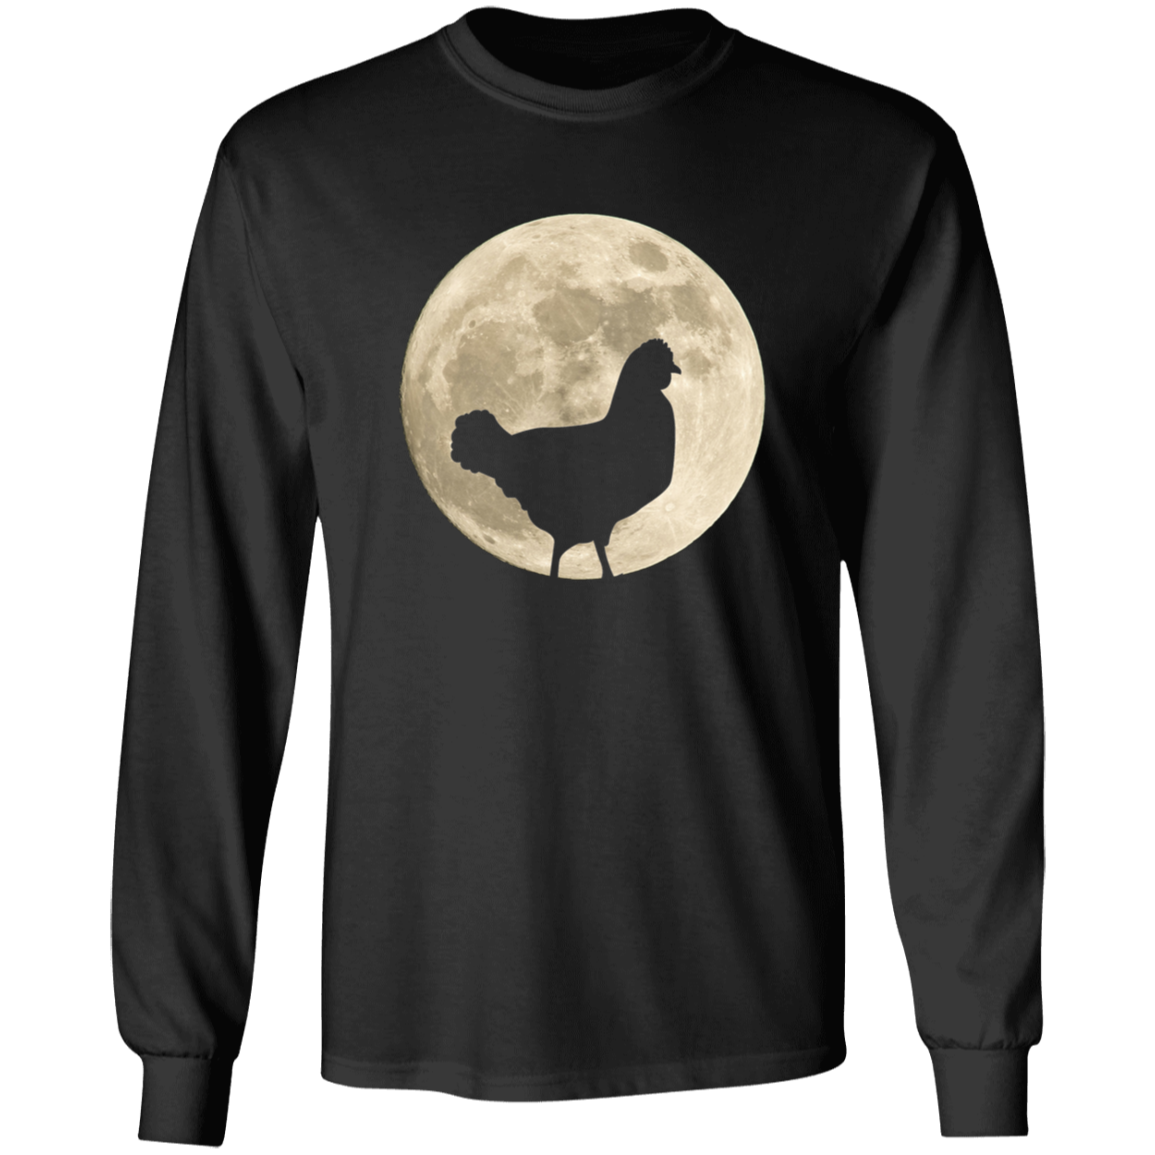 Chicken Moon - T-shirts, Hoodies and Sweatshirts